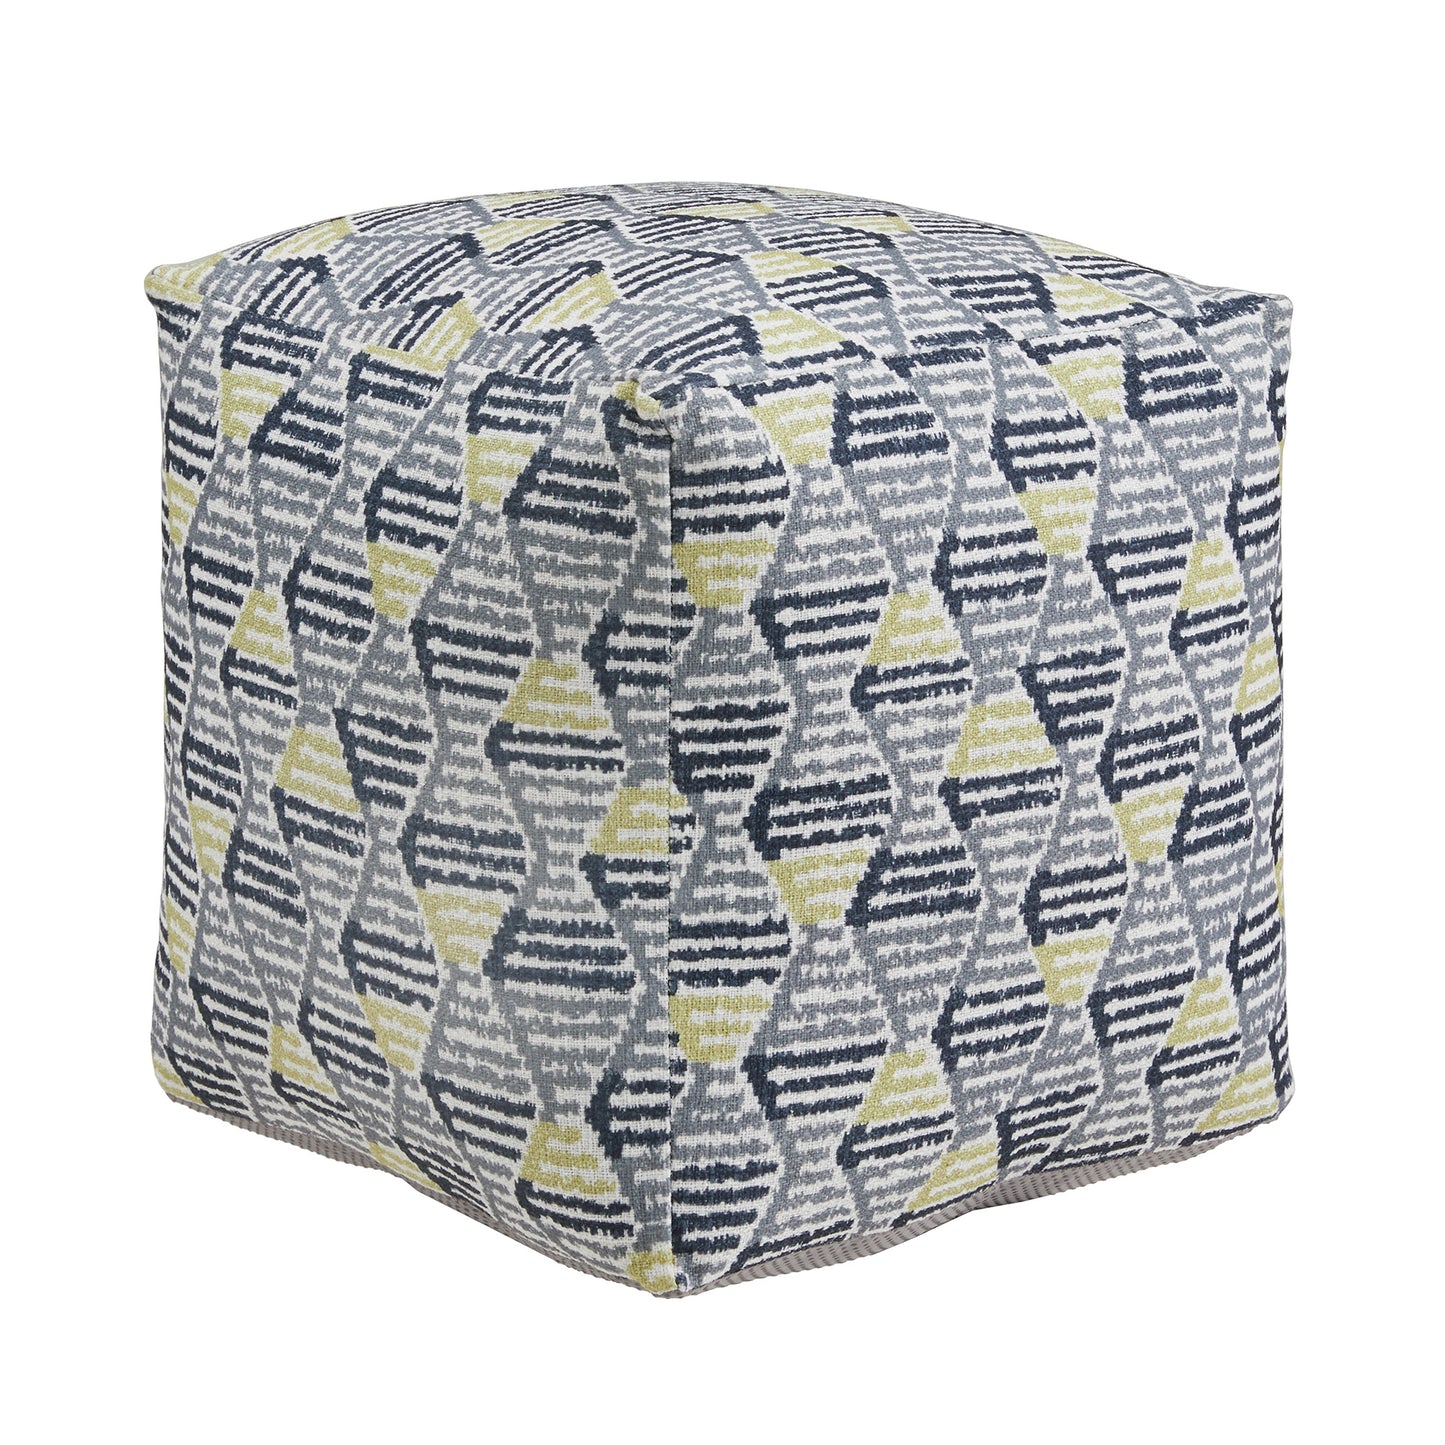 Upholstered Square Pouf Ottoman - Multicolored Diamond Pattern Fabric